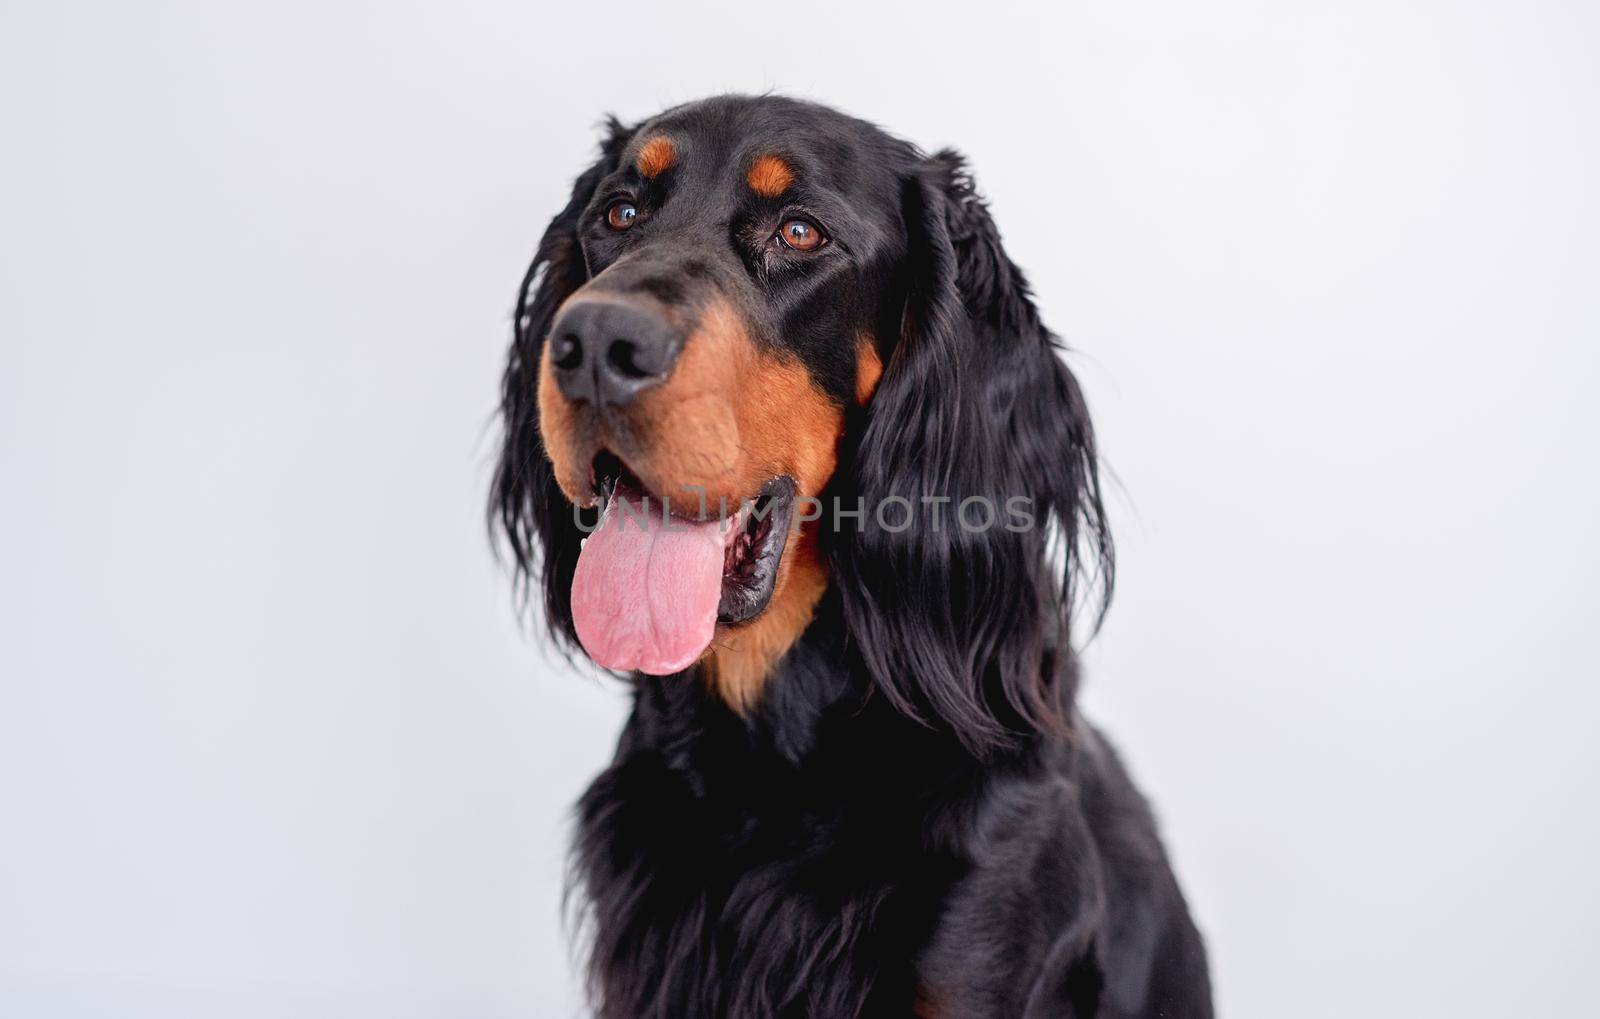 Muzzle of scottish setter dog with tongue out on white background indoors